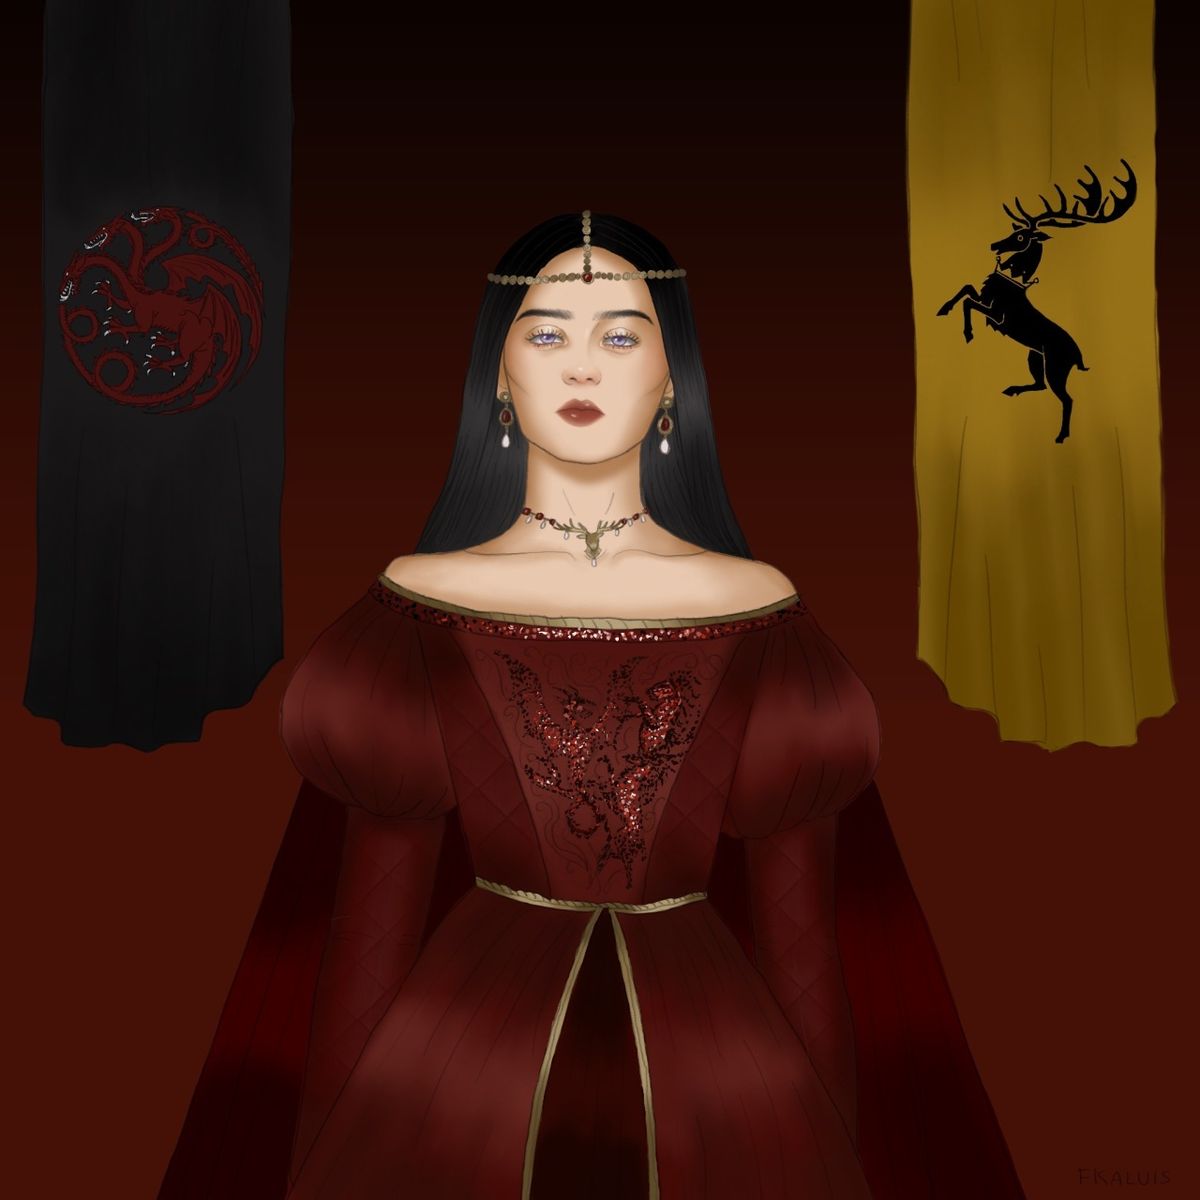 House of the Dragon: Season 3, Wiki of Westeros